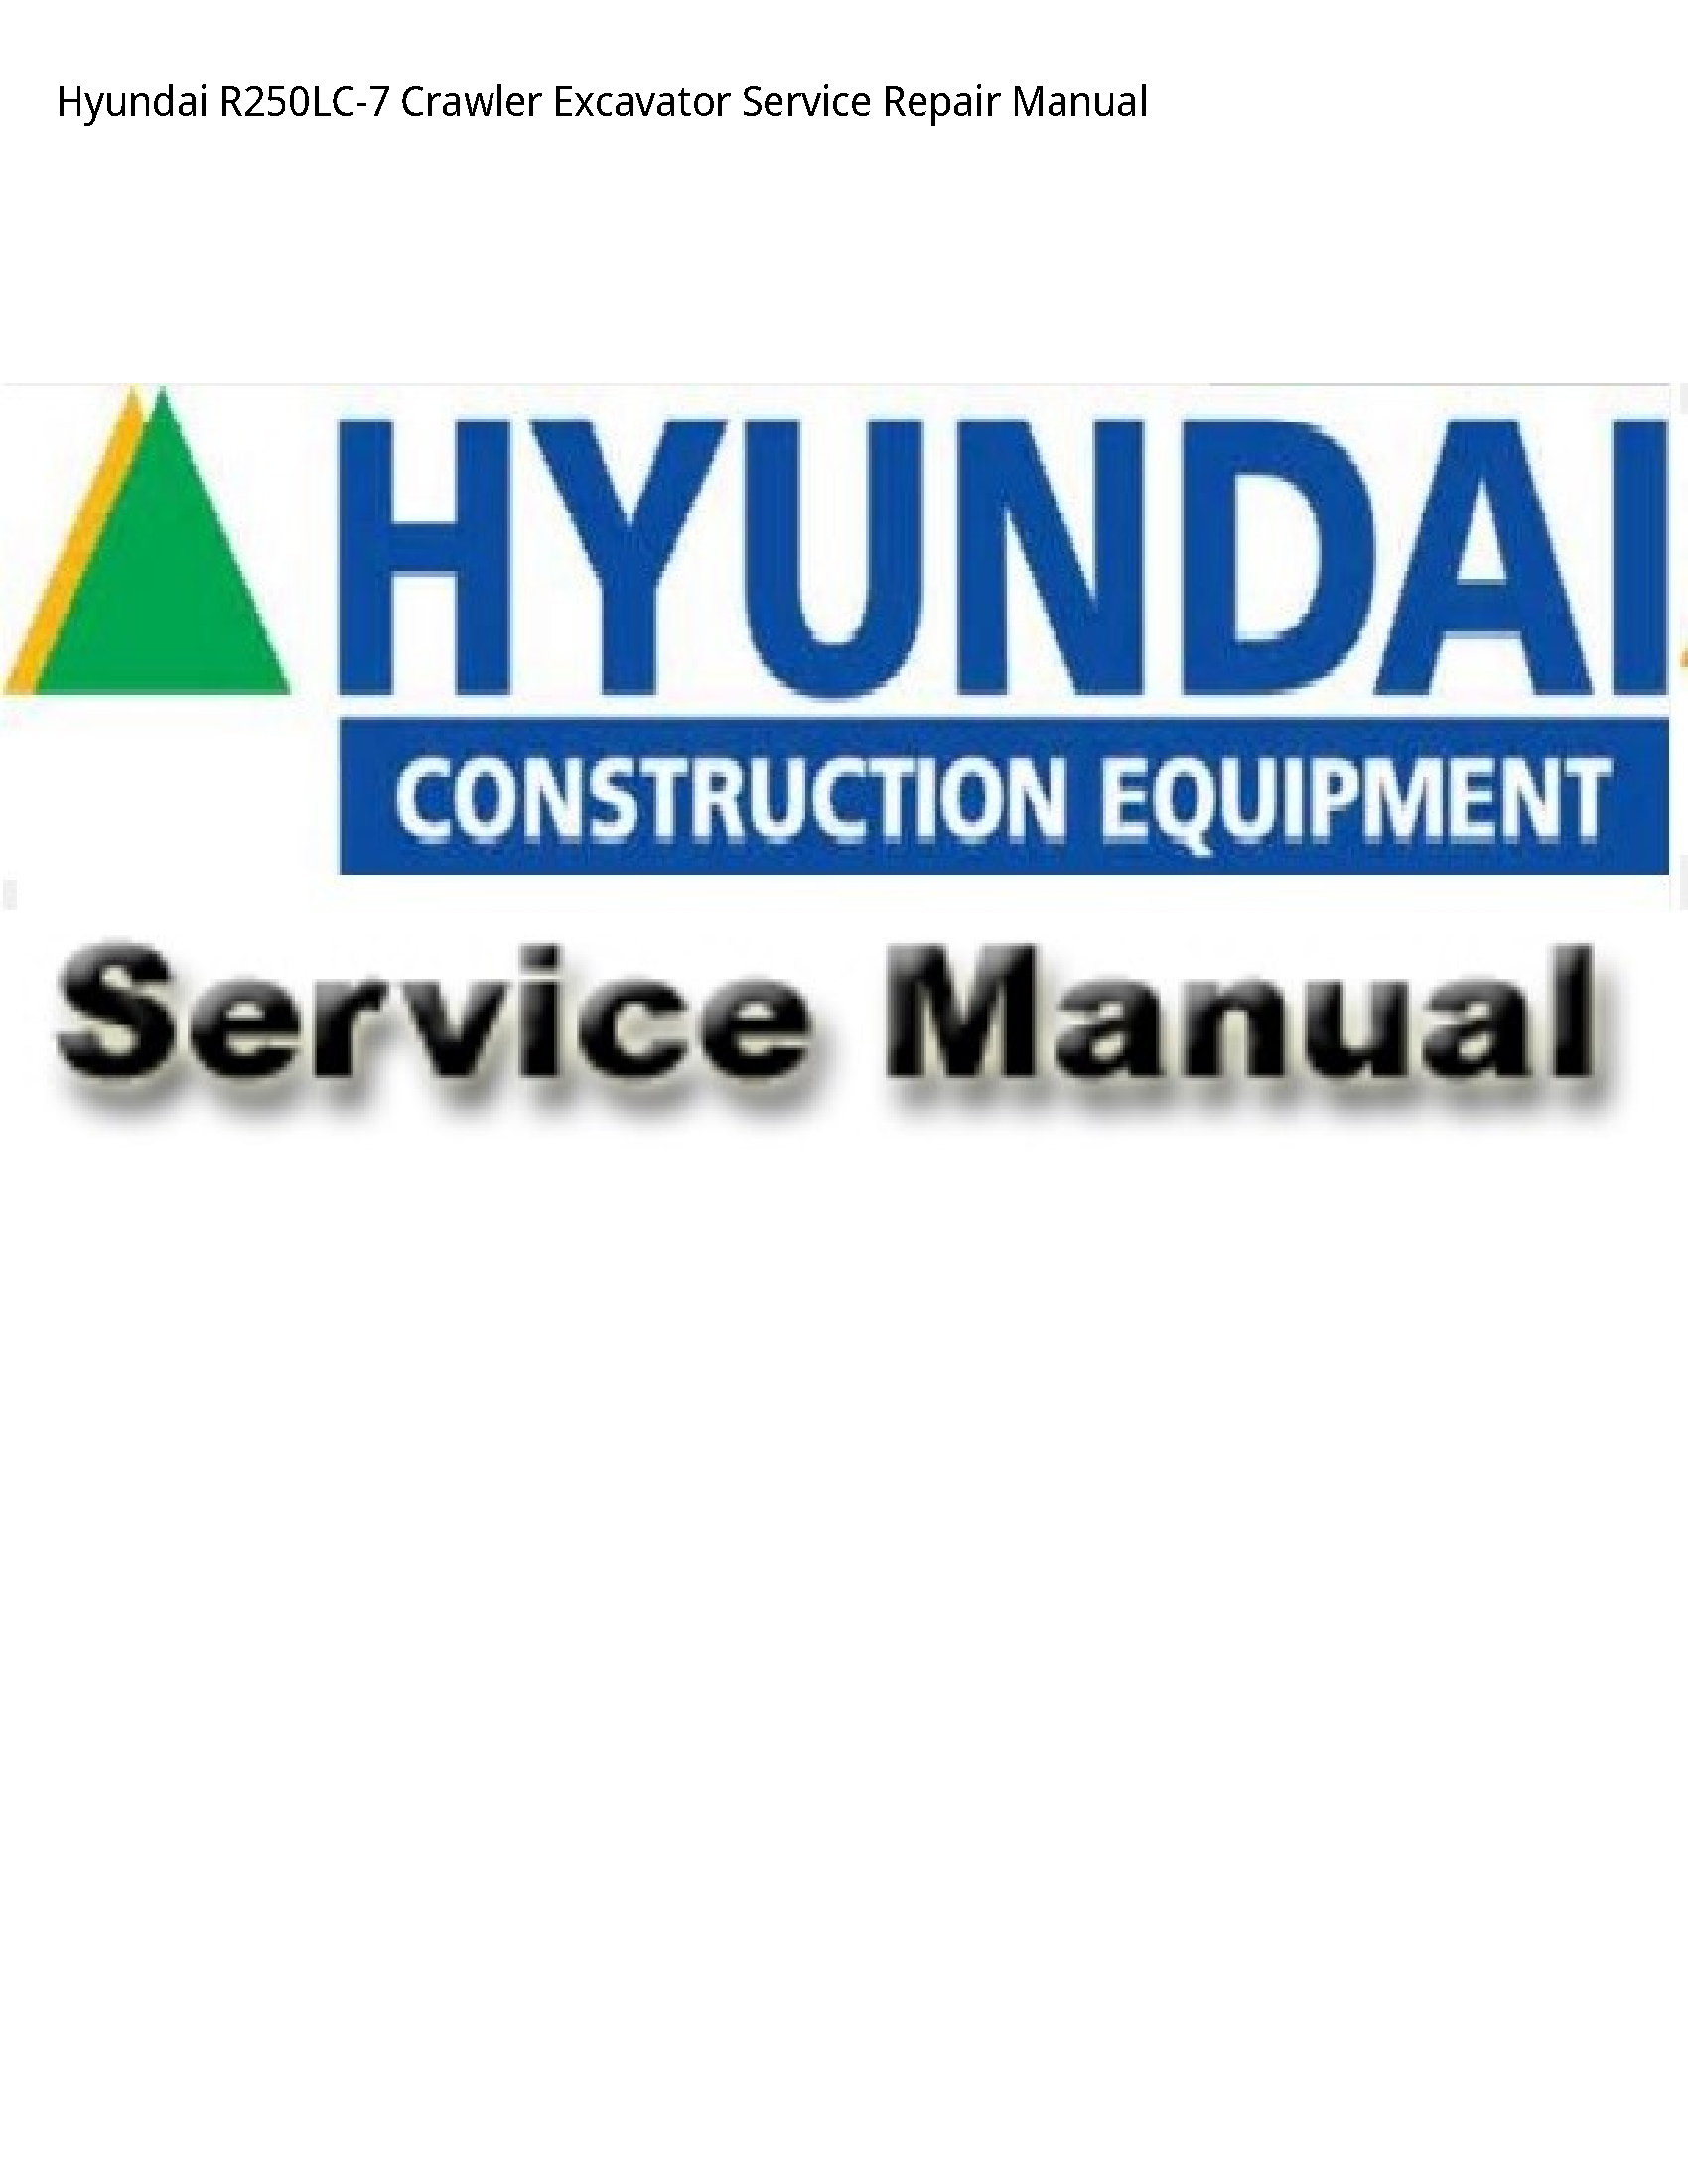 Hyundai R250LC-7 Crawler Excavator manual